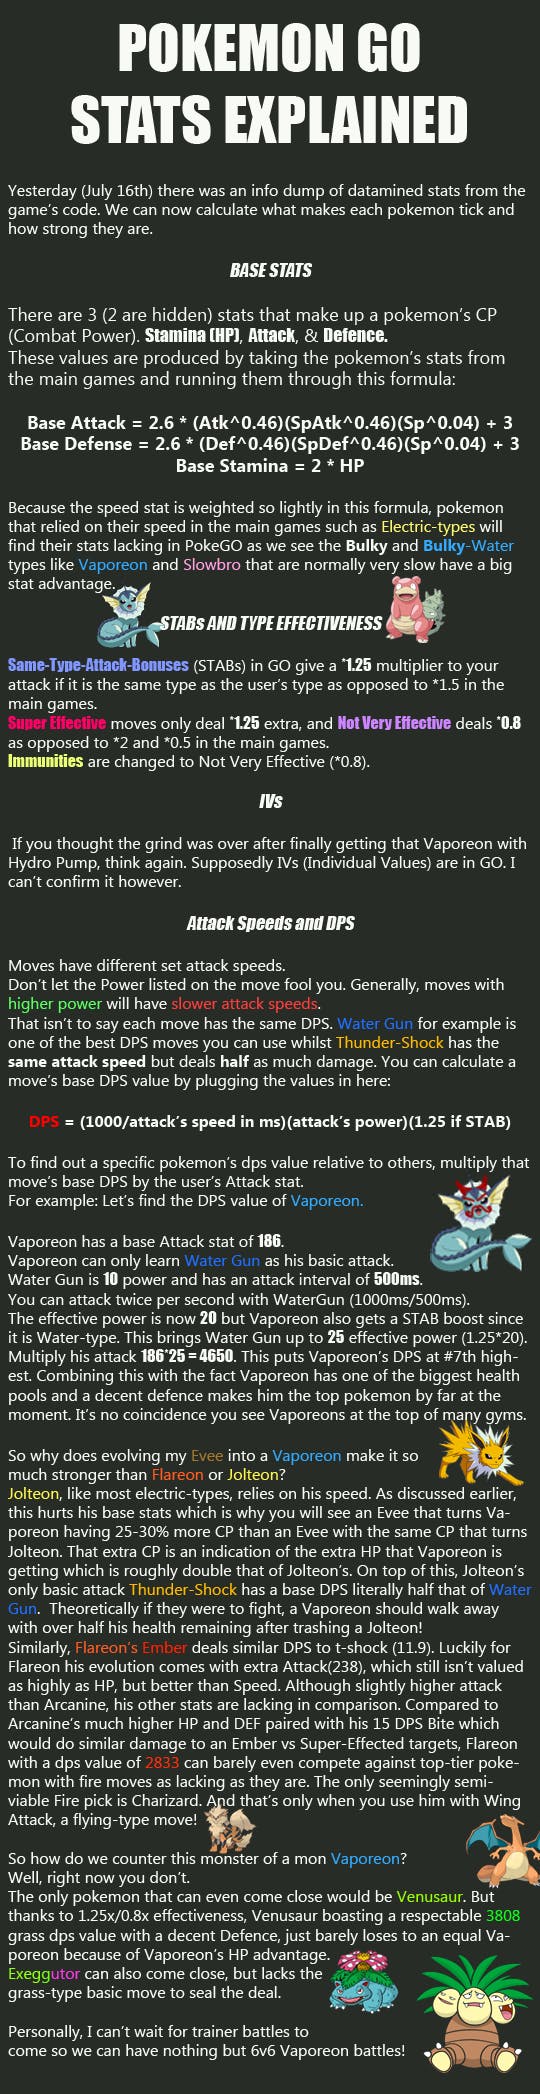 Explaining Why Pokémon Type Advantages Work - Weaknesses & Super